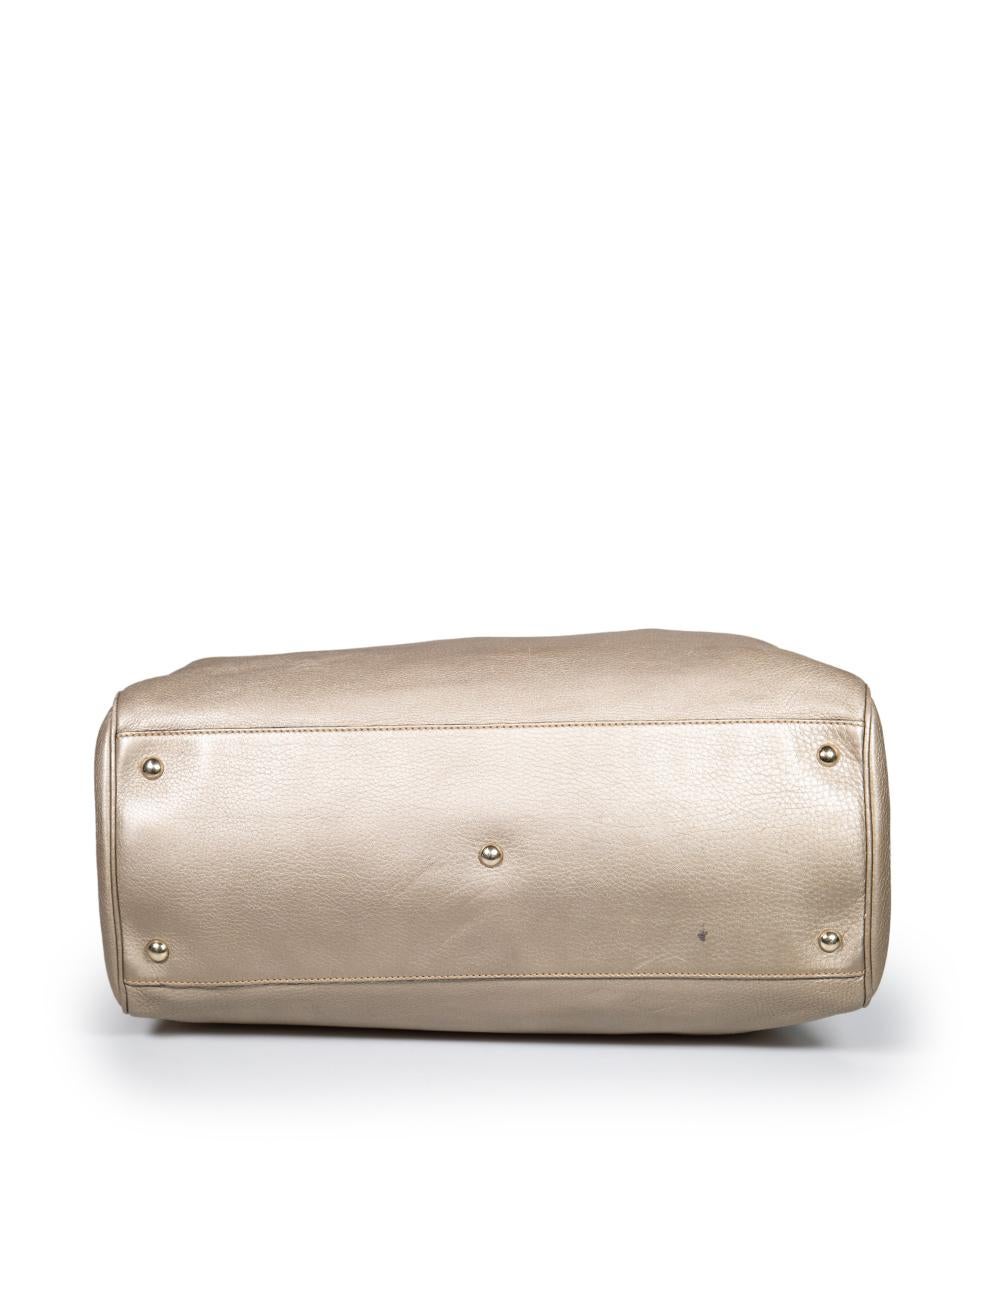 Women's Gucci Taupe Metallic Leather Bamboo Handbag